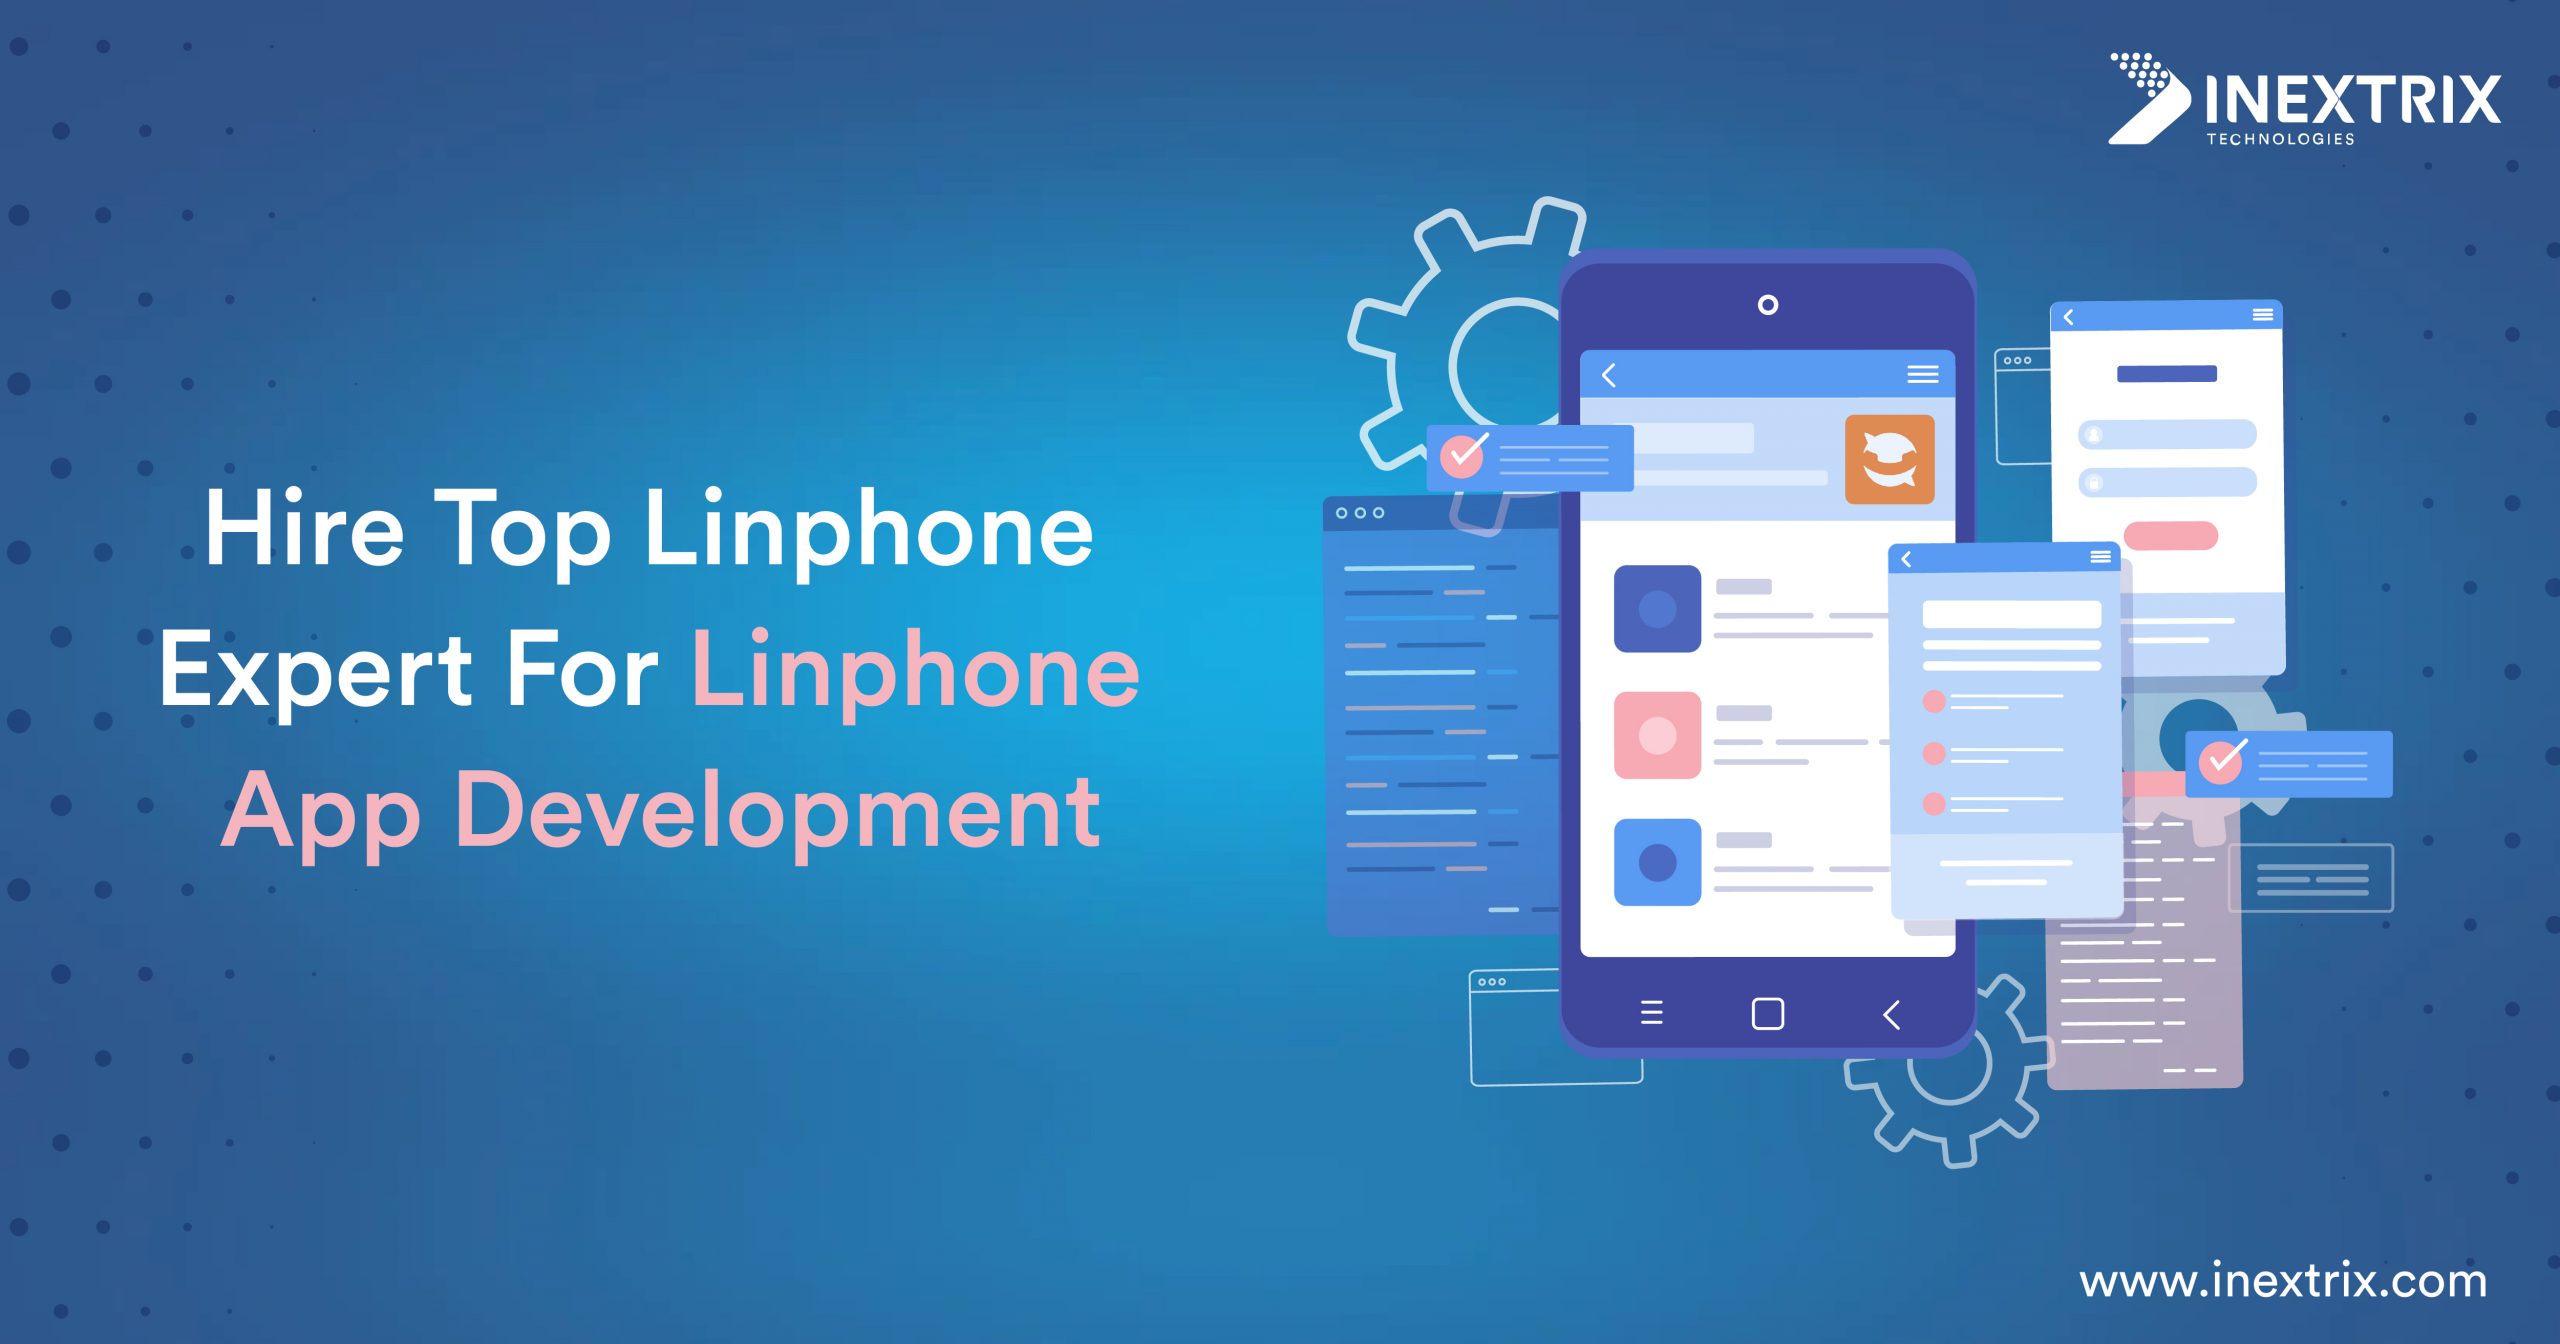 Hire Top Linphone Expert For Linphone App Development